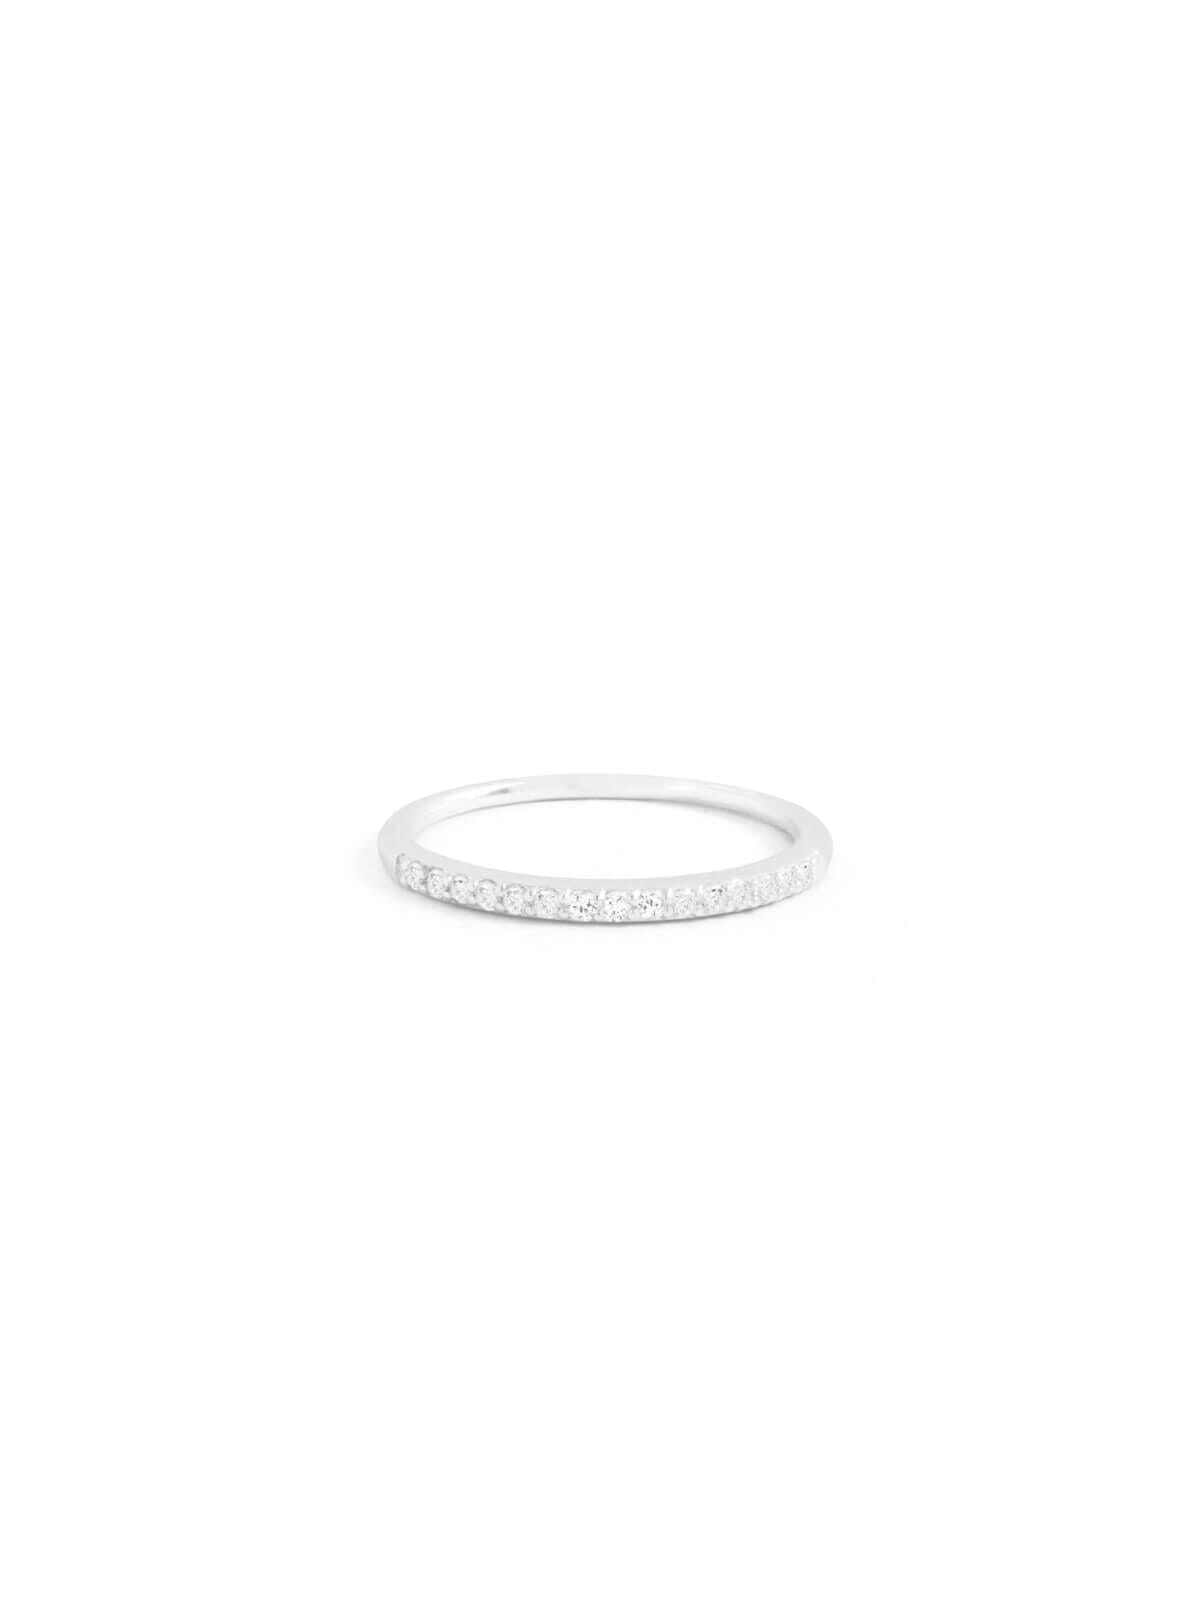 By Charlotte | 14k White Gold Diamond Halo Ring | Perlu